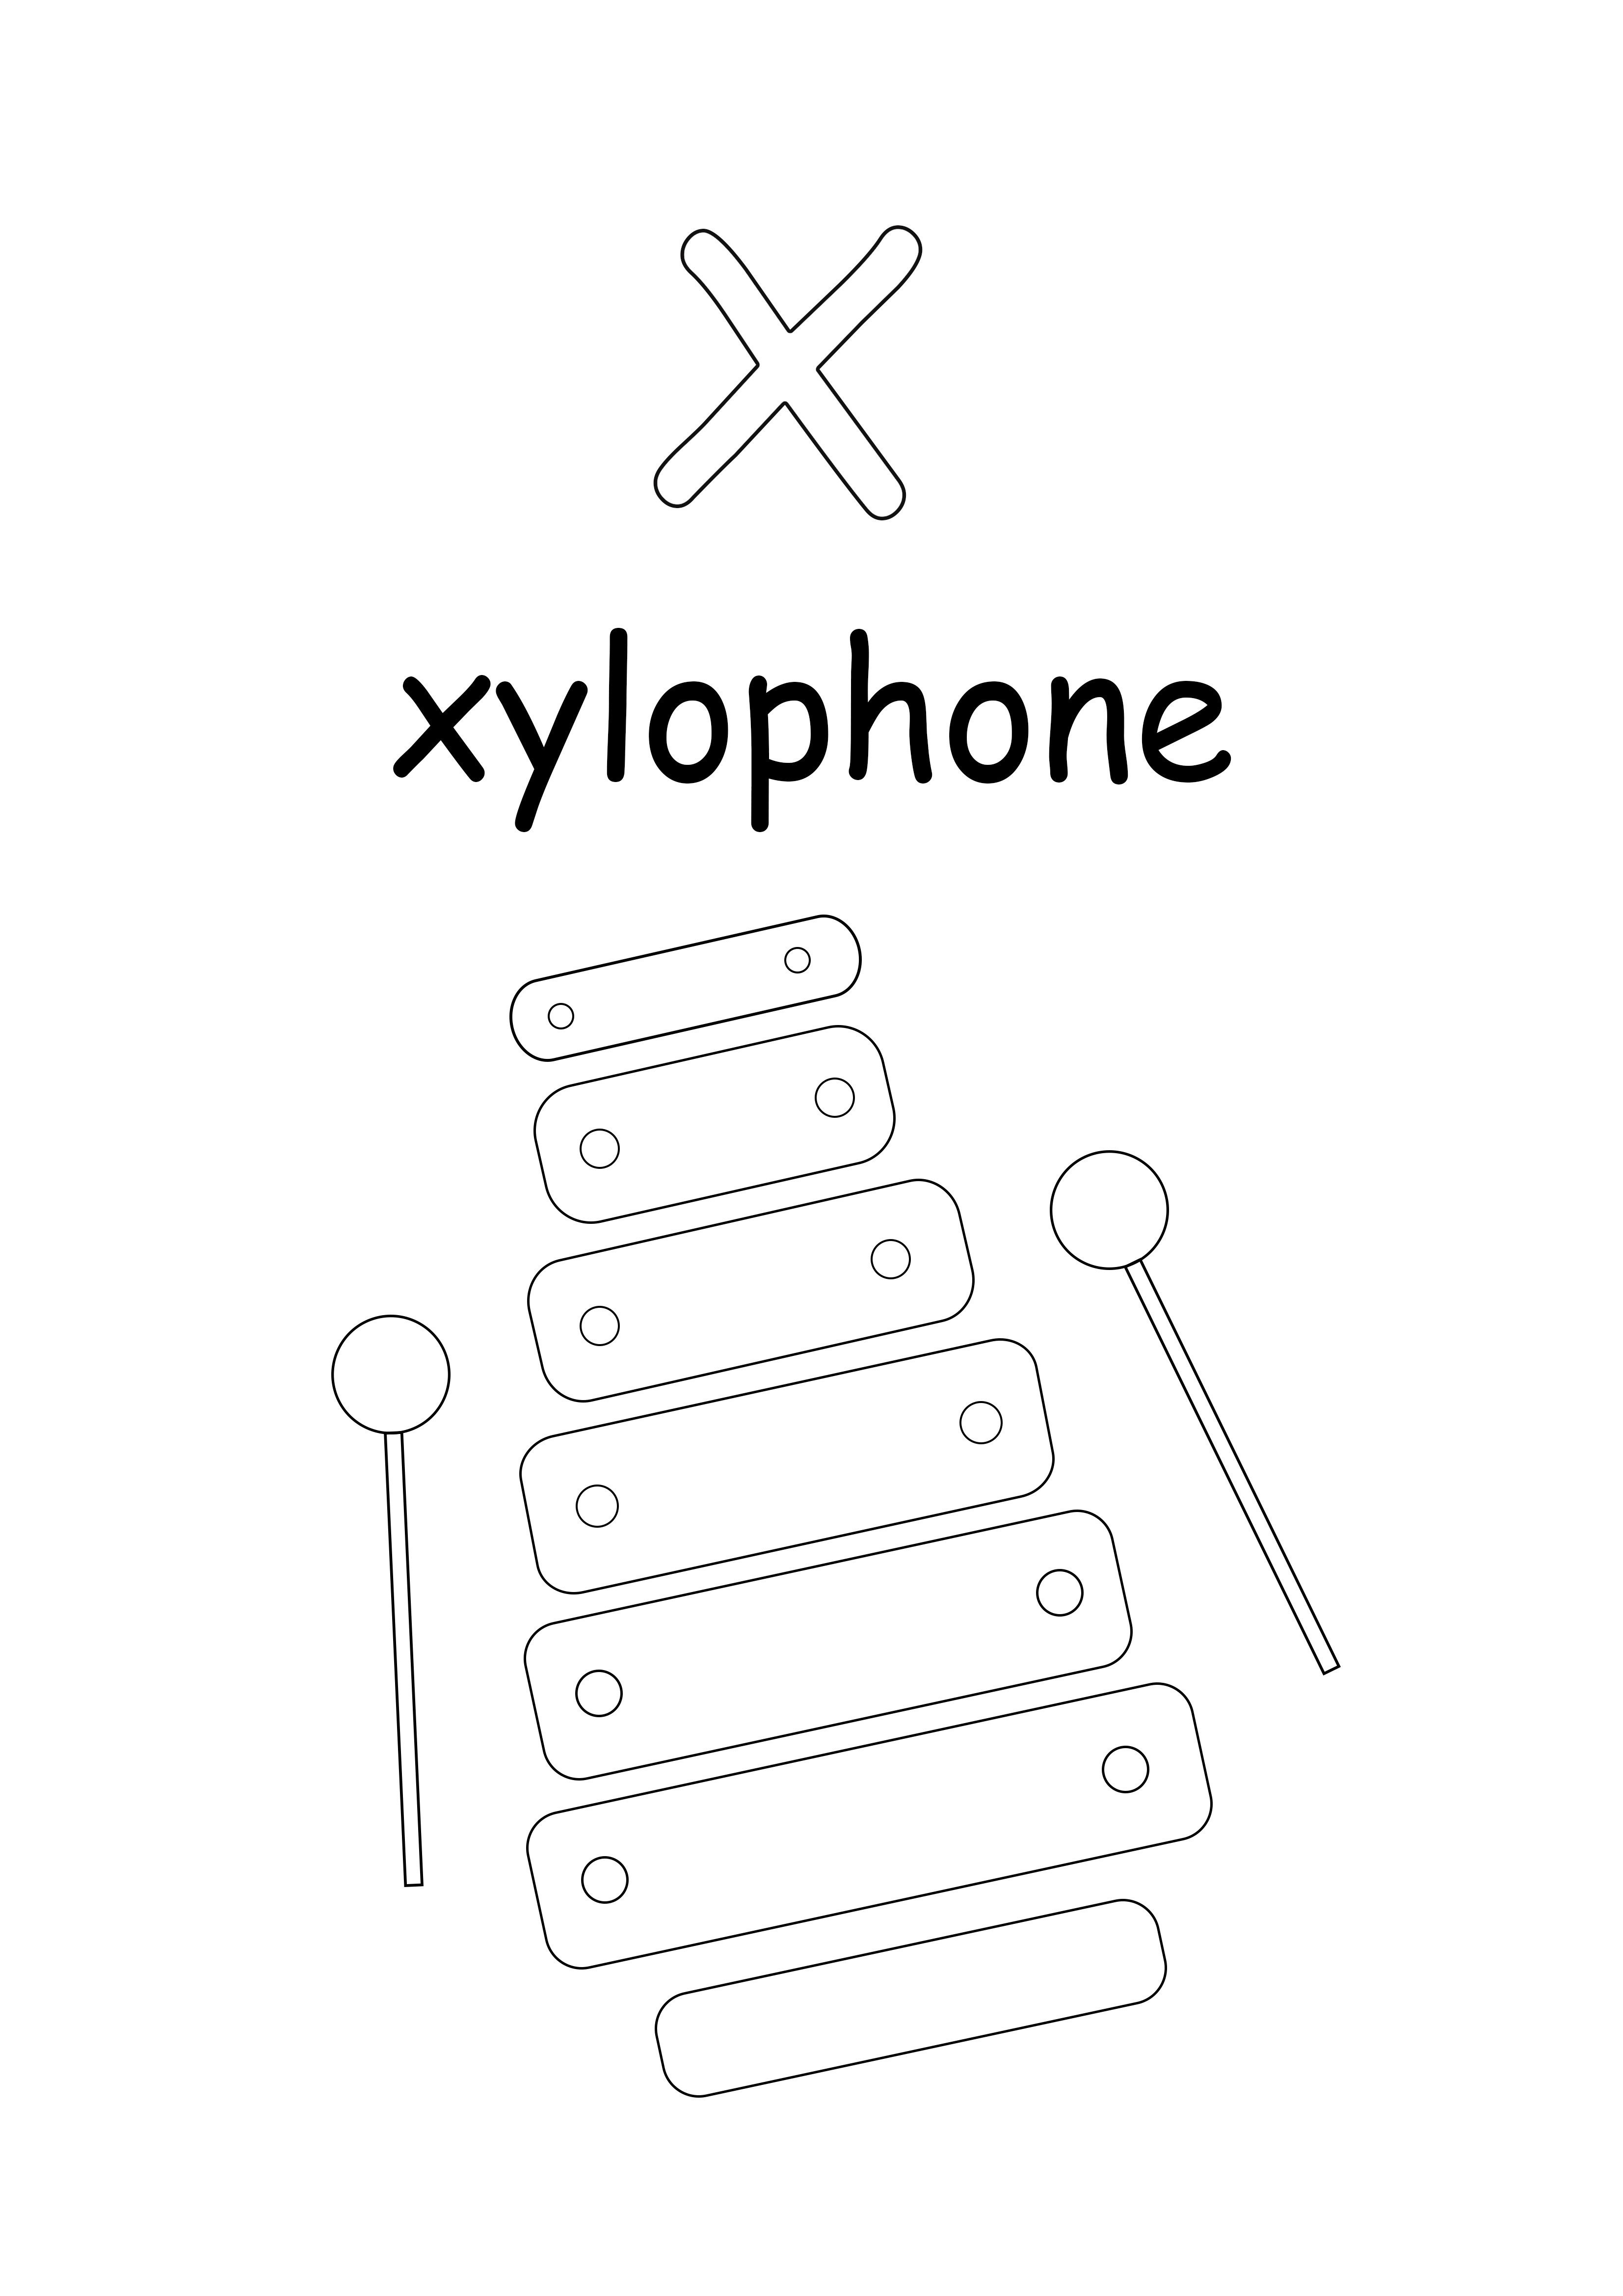 Huruf kecil x untuk pewarnaan dan pencetakan tanpa xylophone